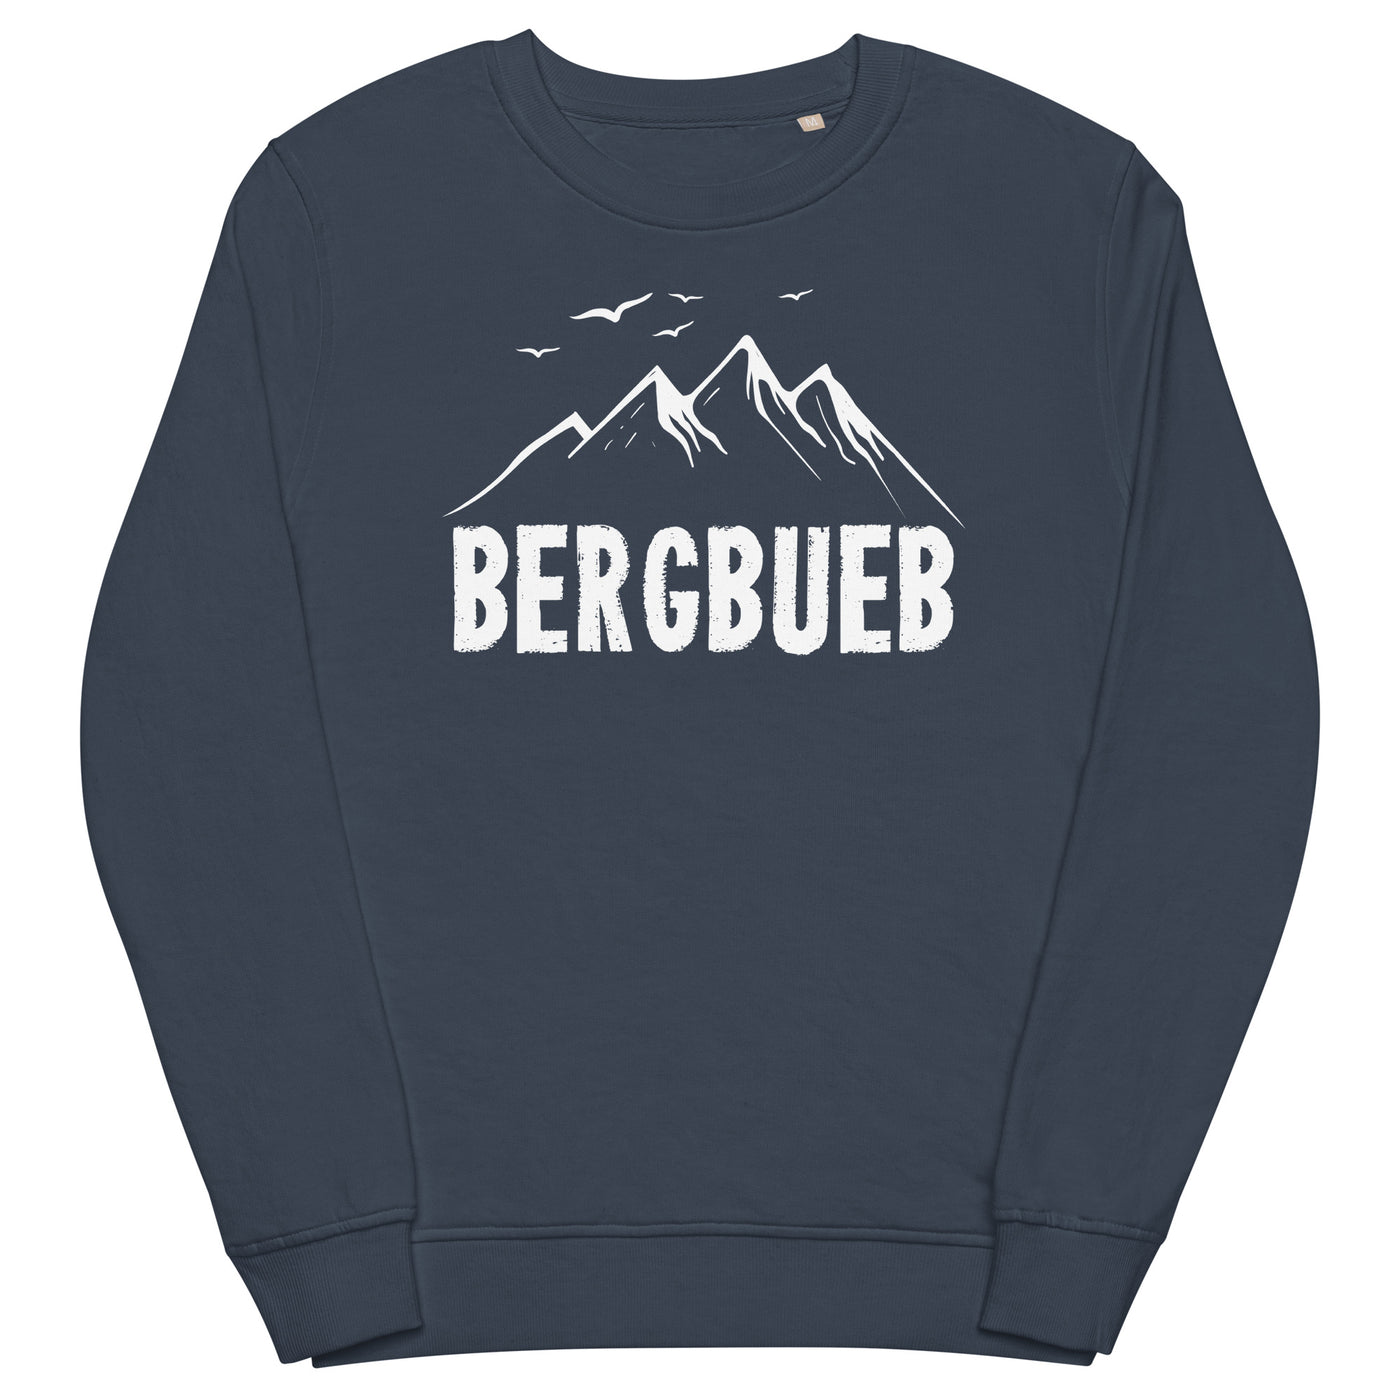 Bergbueb - Unisex Premium Organic Sweatshirt berge Navyblau